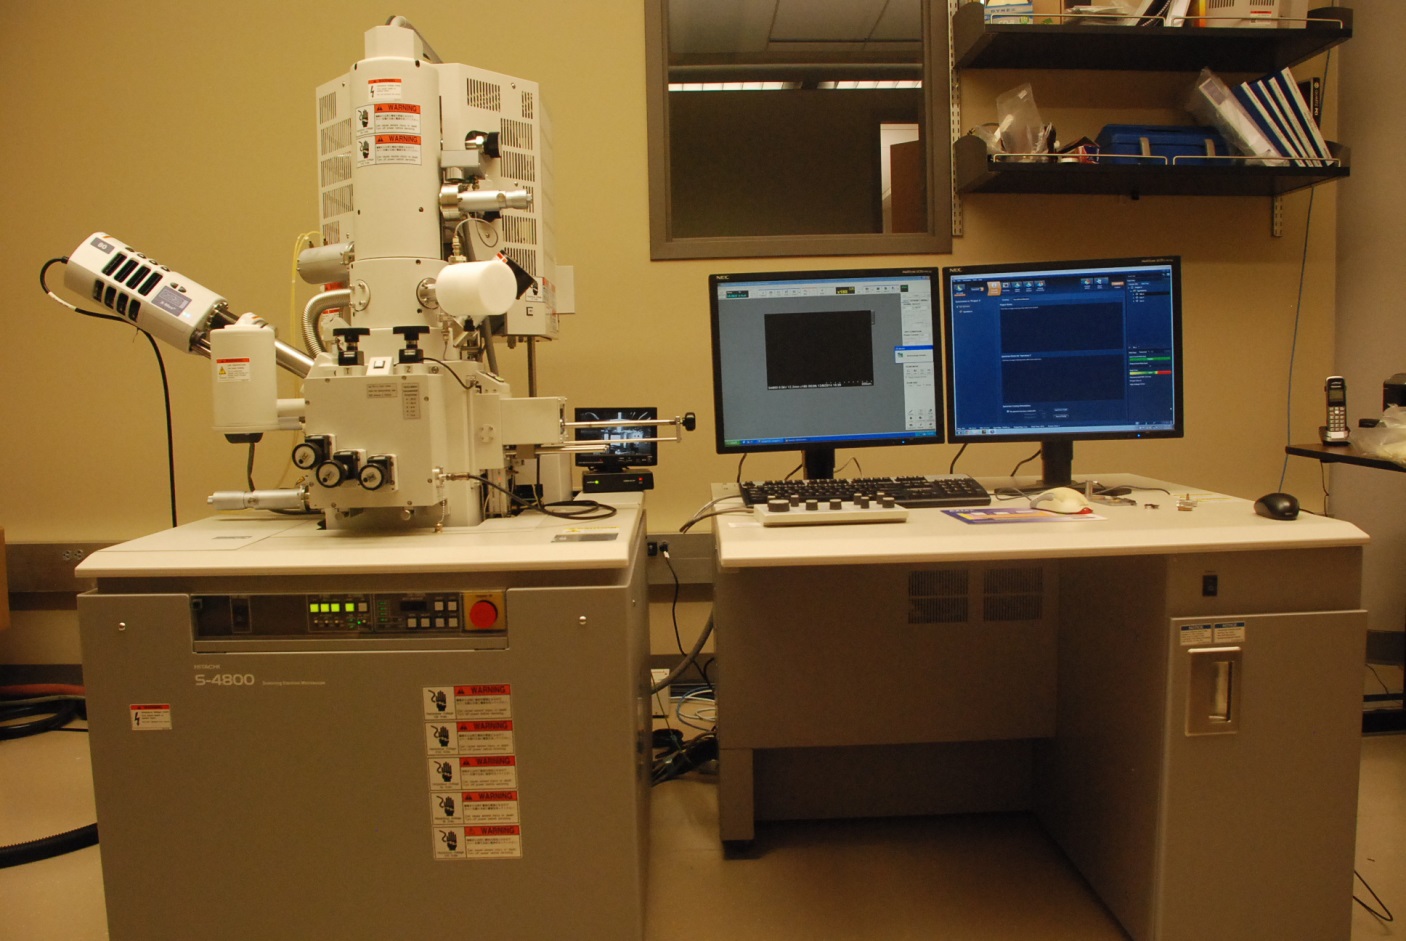 Hitachi S-4800 Field Emission Scanning Electron Microscope (FE-SEM)